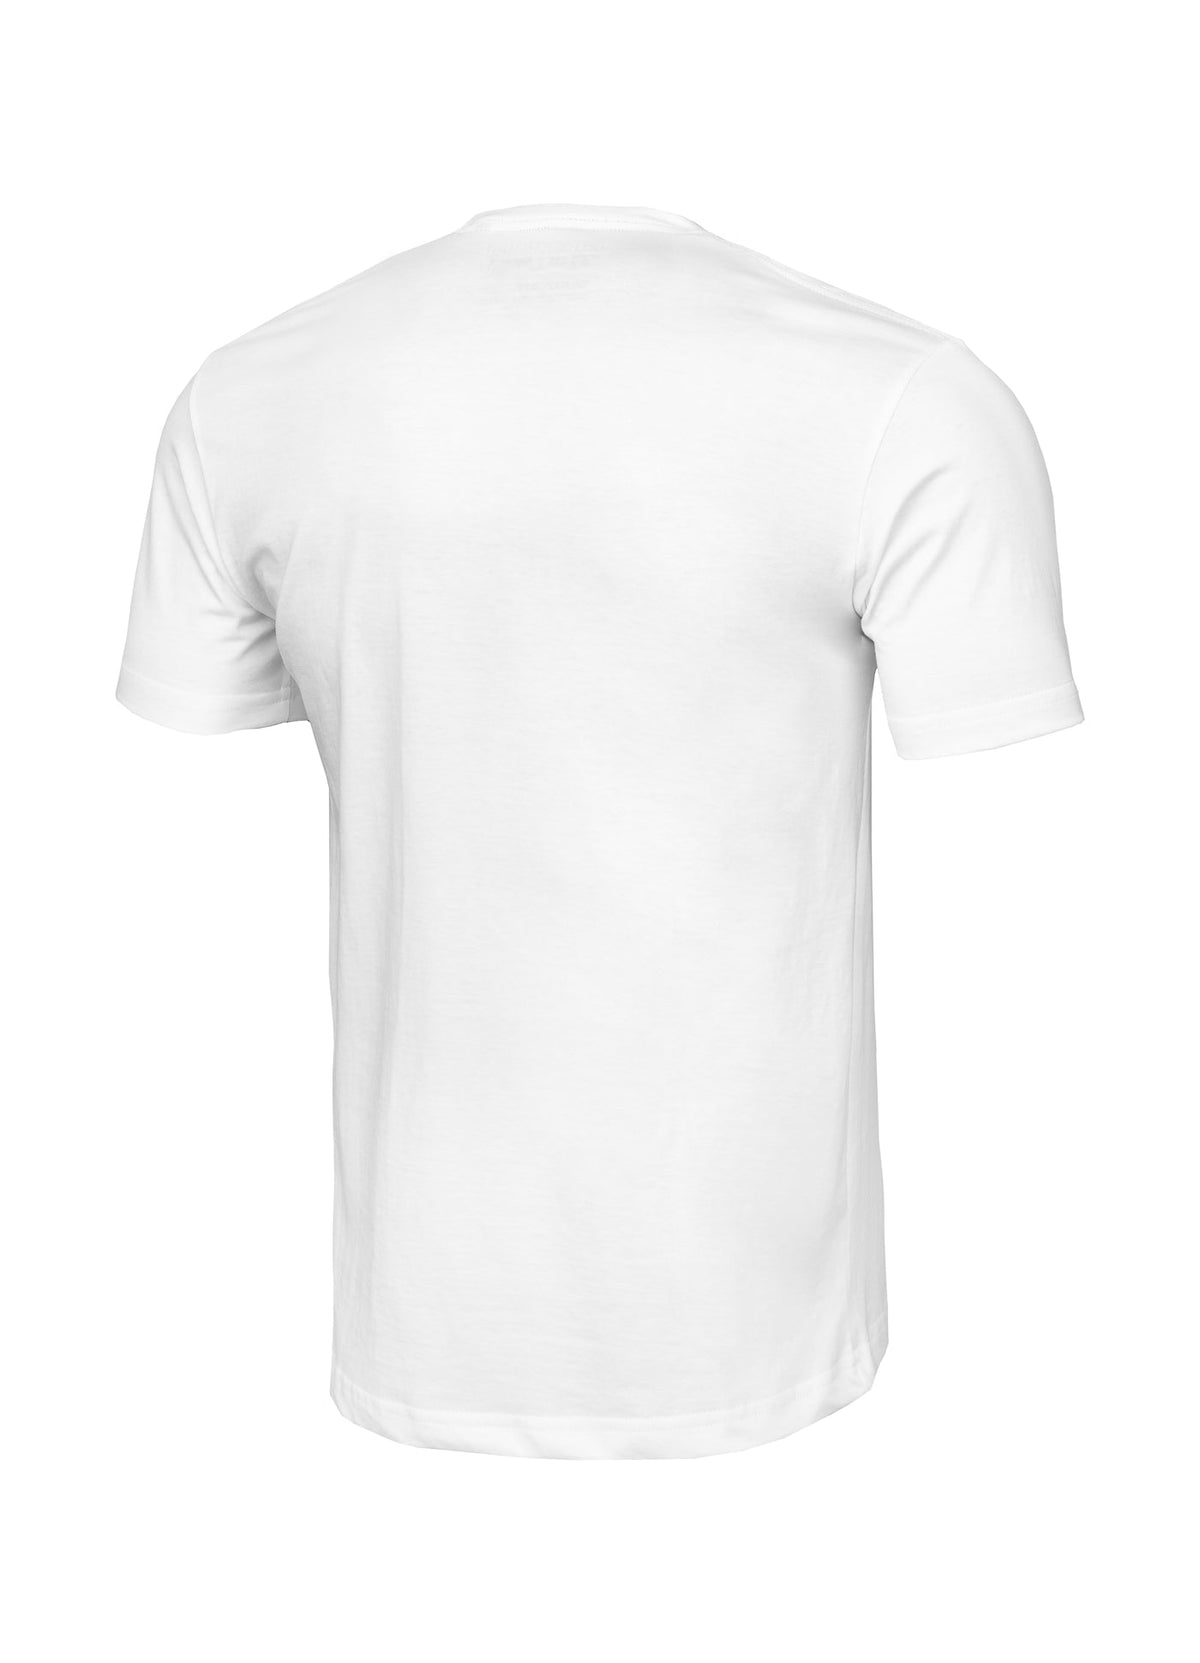 SMALL LOGO 21 White T-Shirt